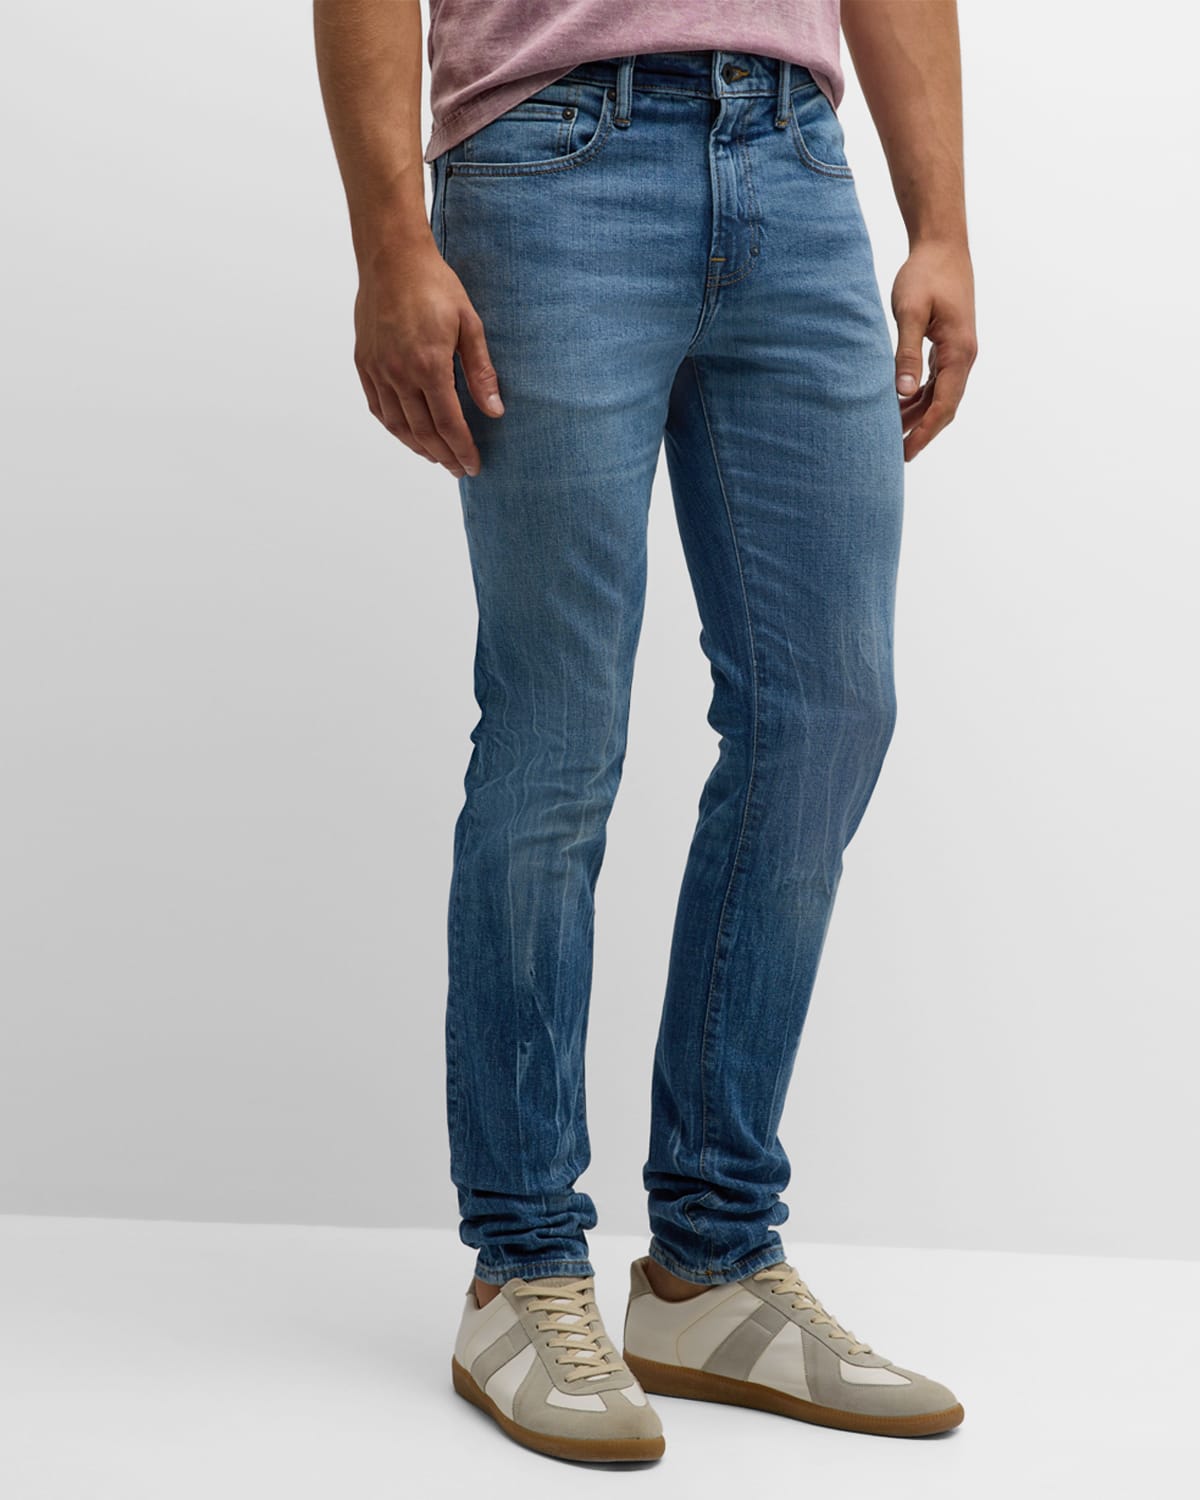 Men's Solutions Windsor Skinny Denim Jeans